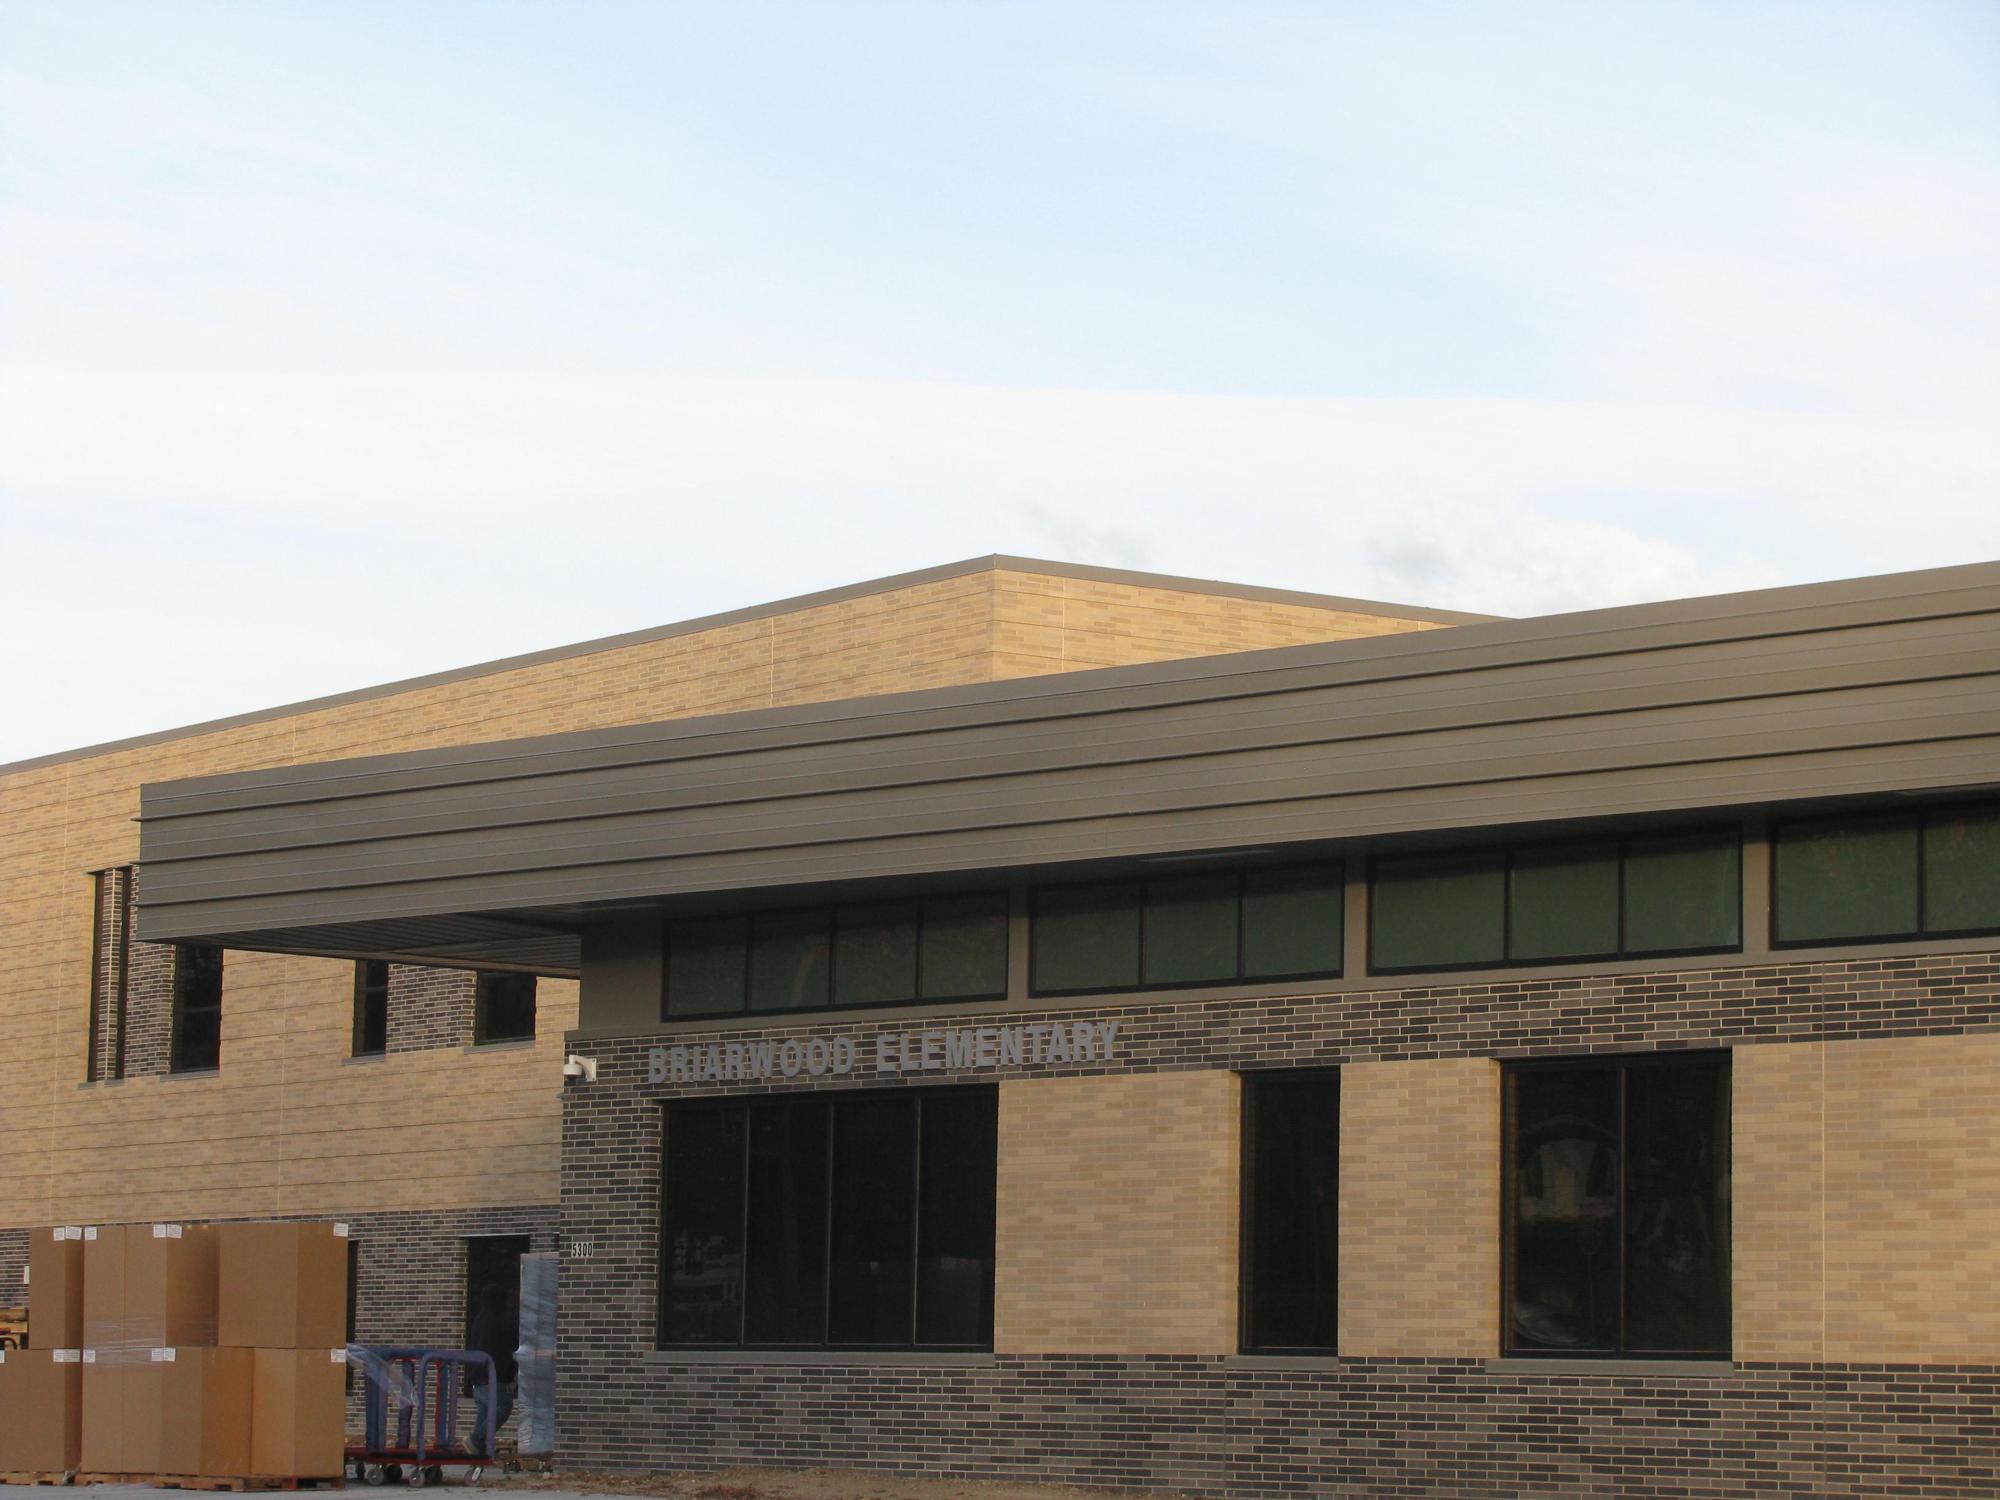 Exterior image of Briarwood Elementary